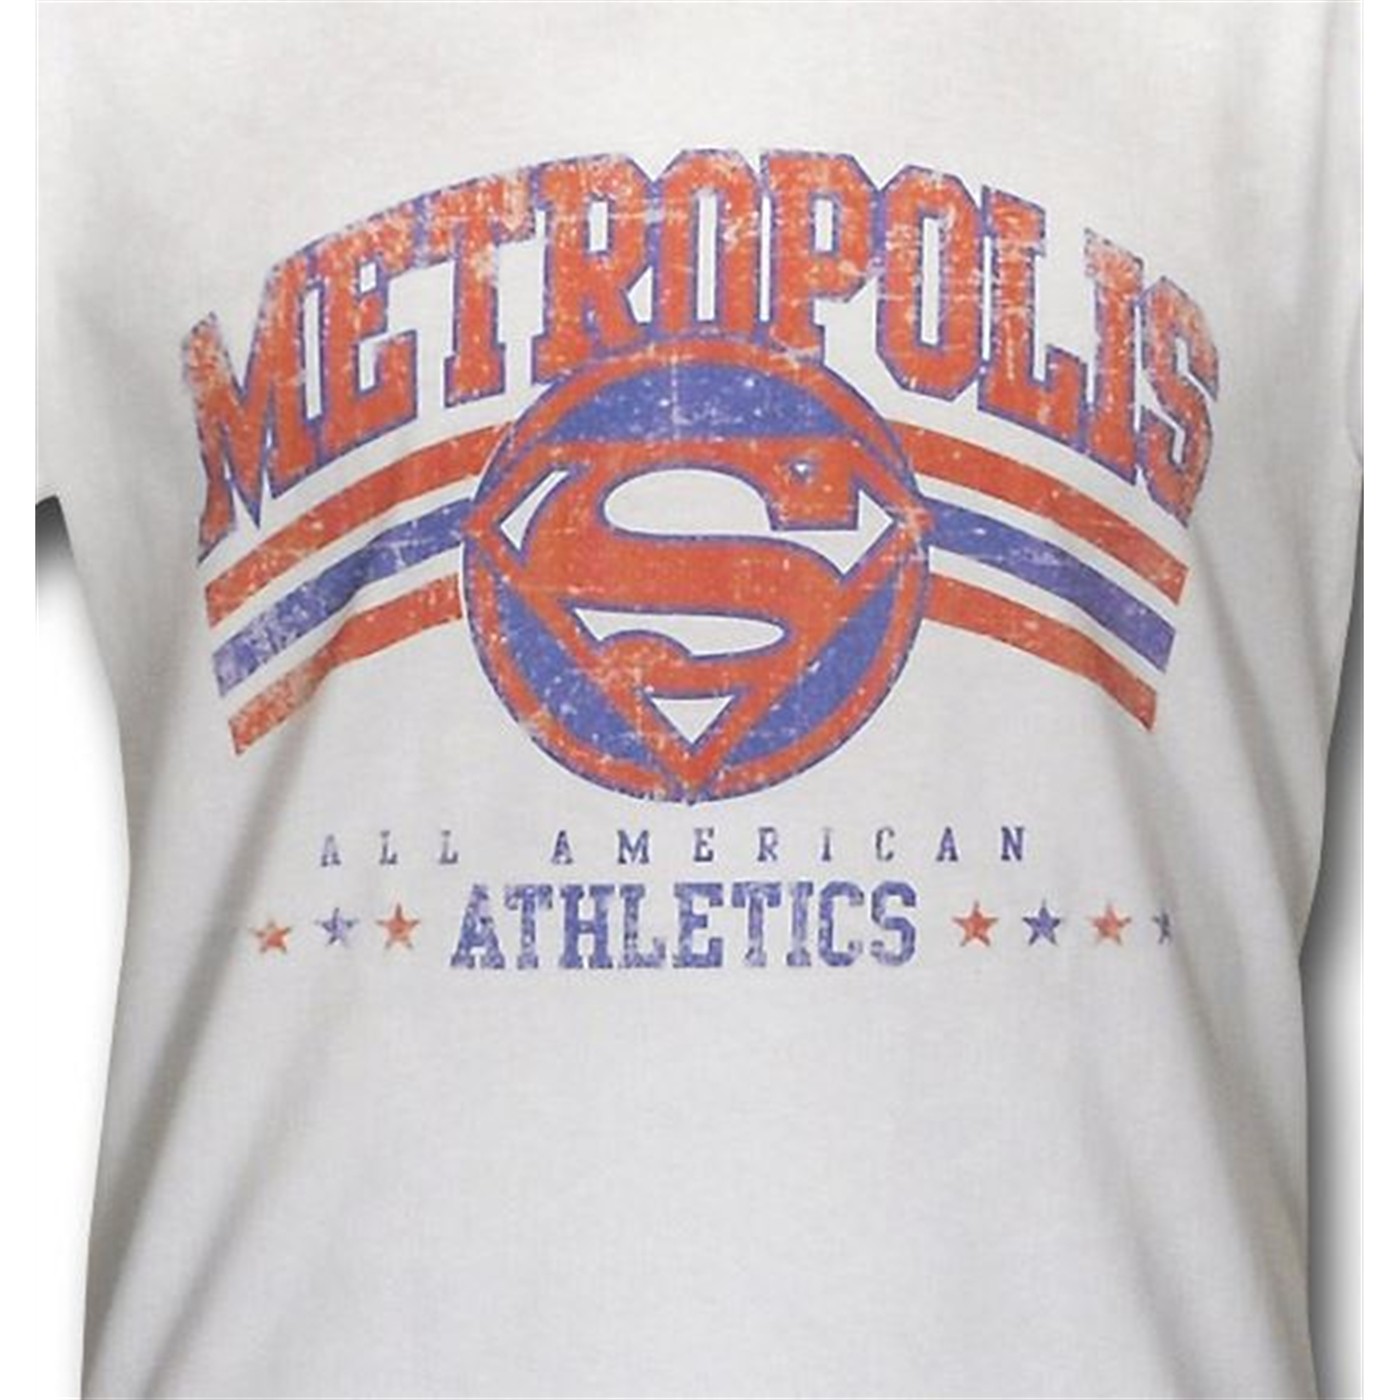 Superman Metropolis Team Ringer T-Shirt